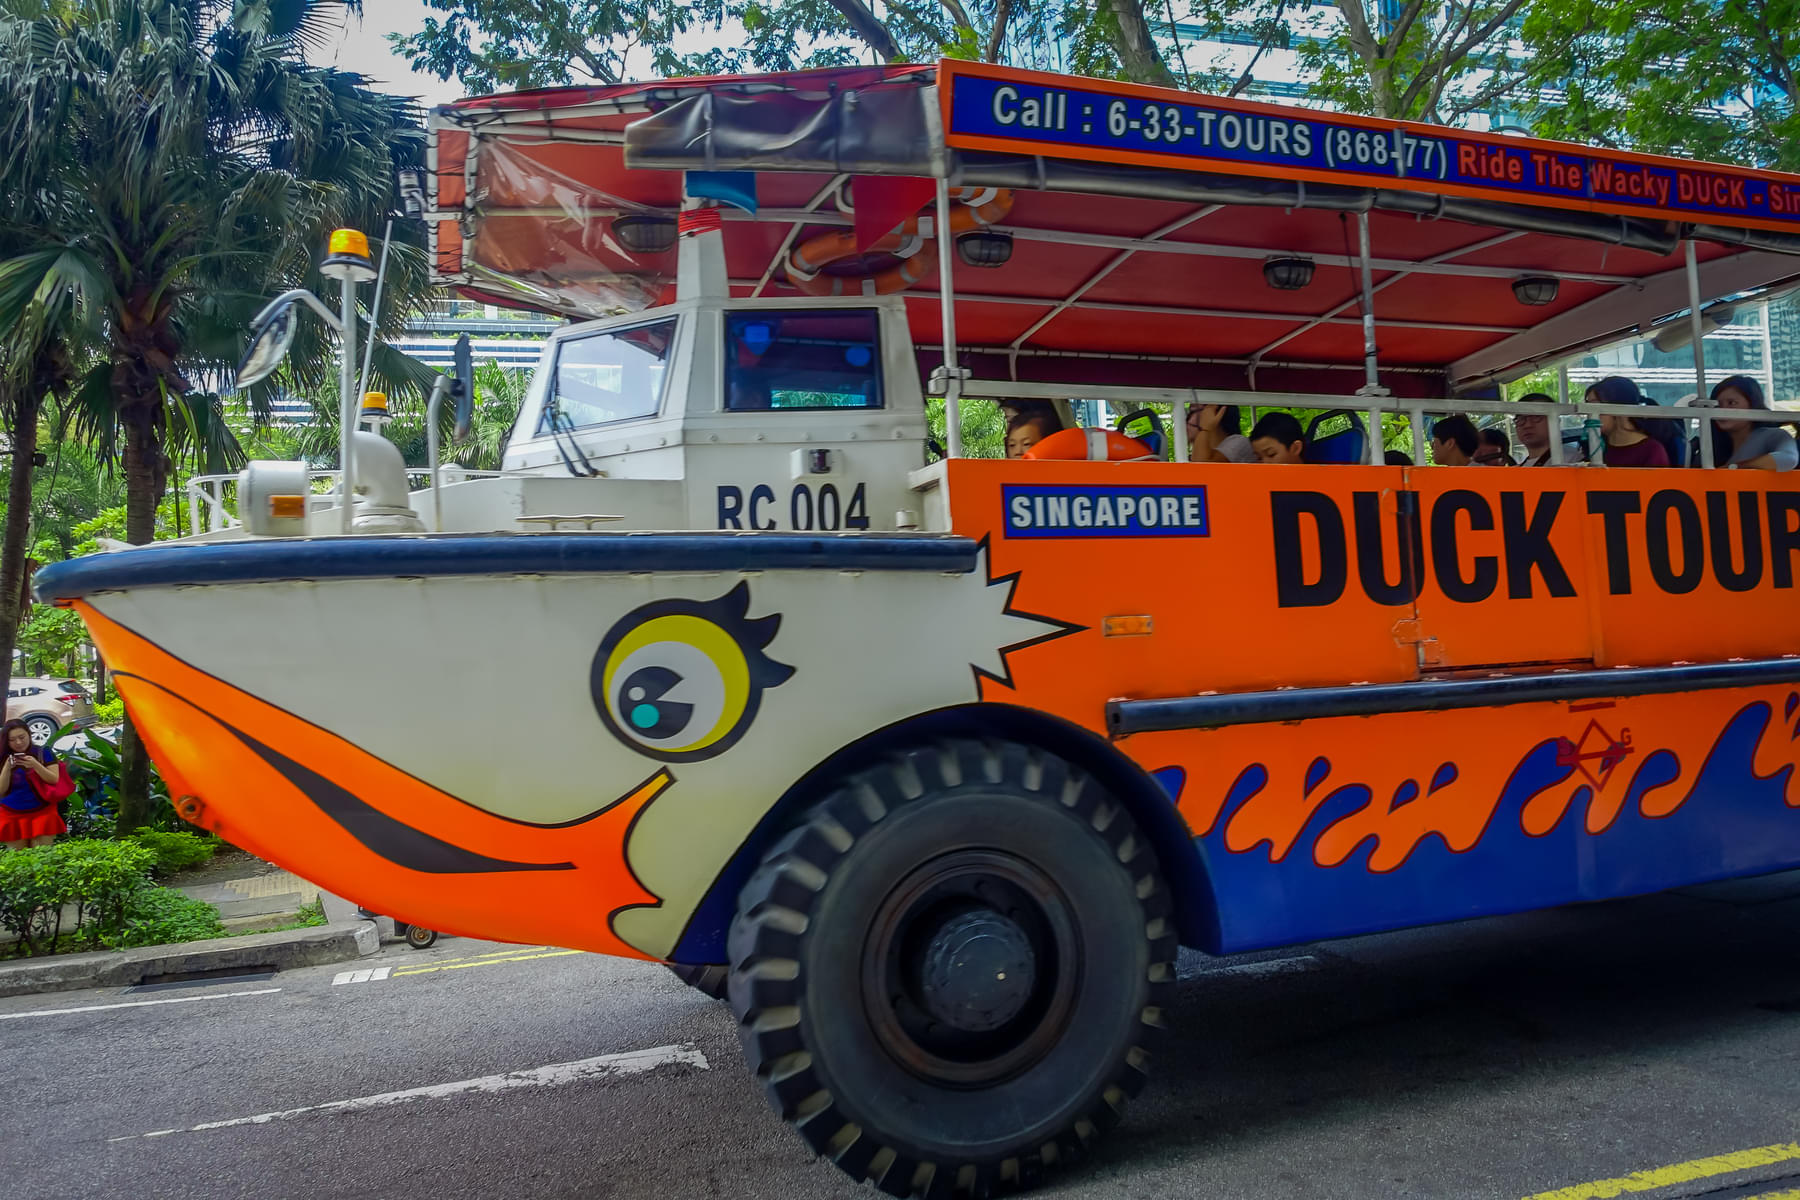 Explore Singapore on Duck tour